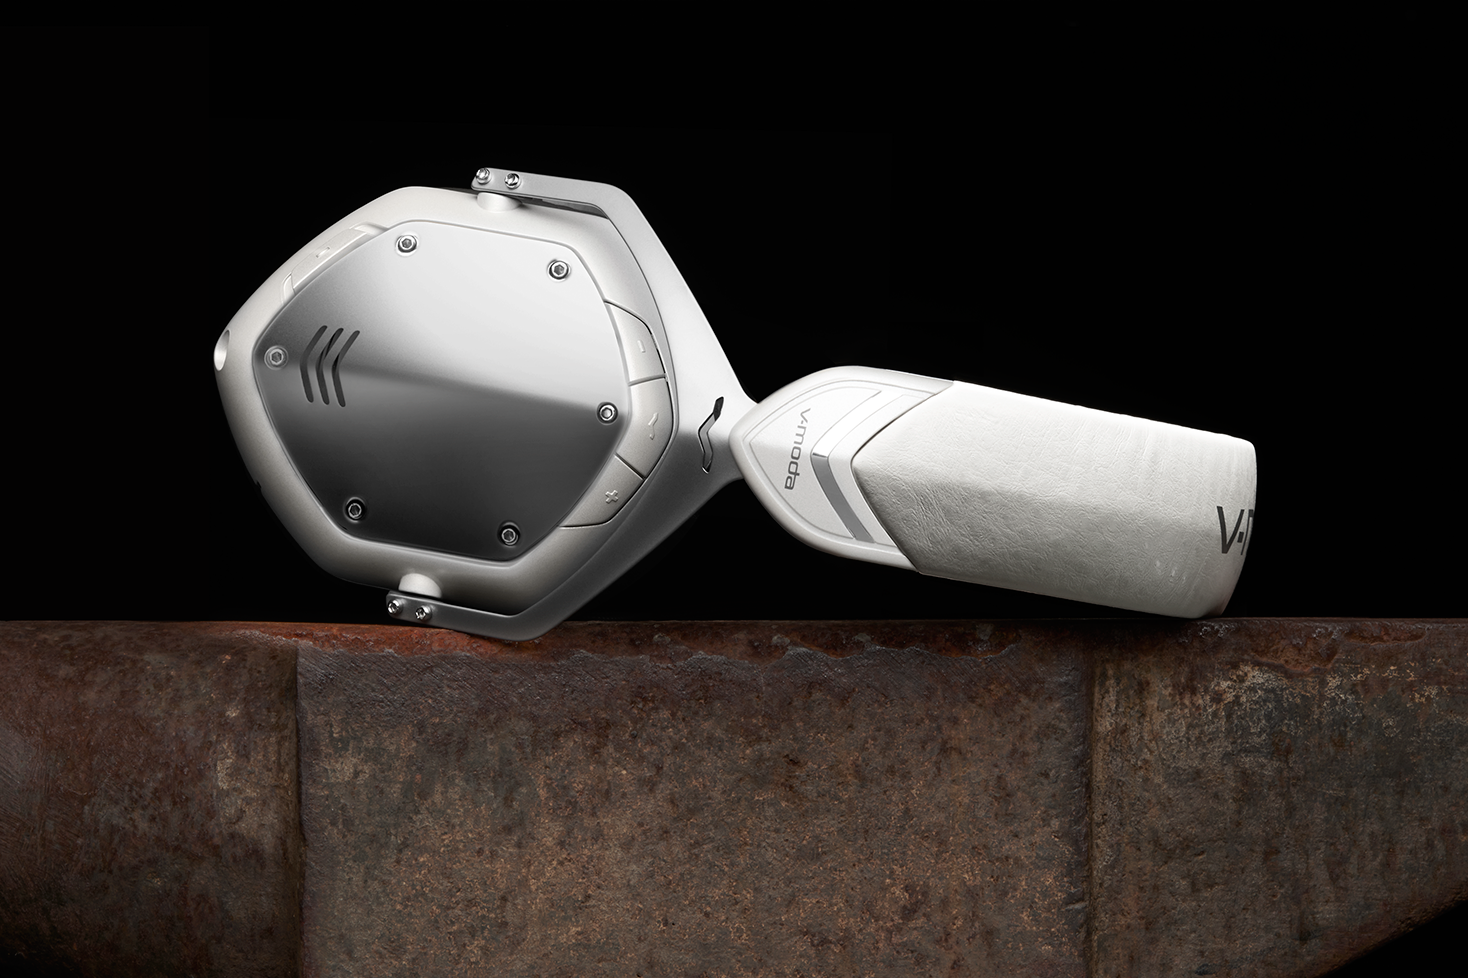 vmoda crossfade wireless headphones reimagined m100 white silver anvil web